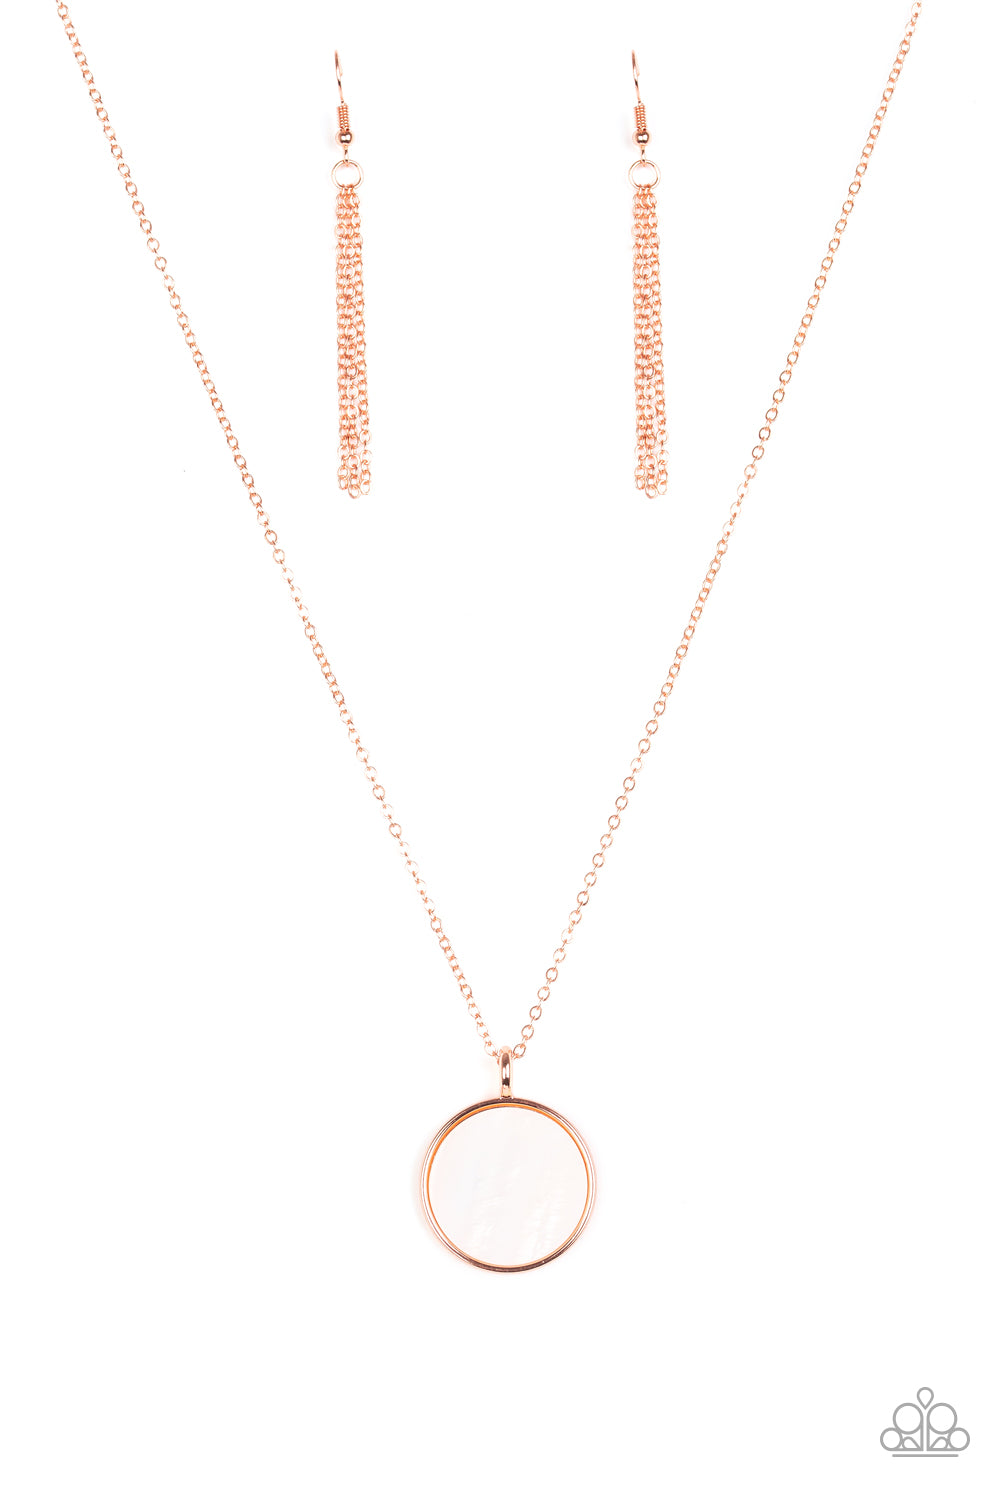 Shimmering Seashores - Copper Necklace Set - Princess Glam Shop